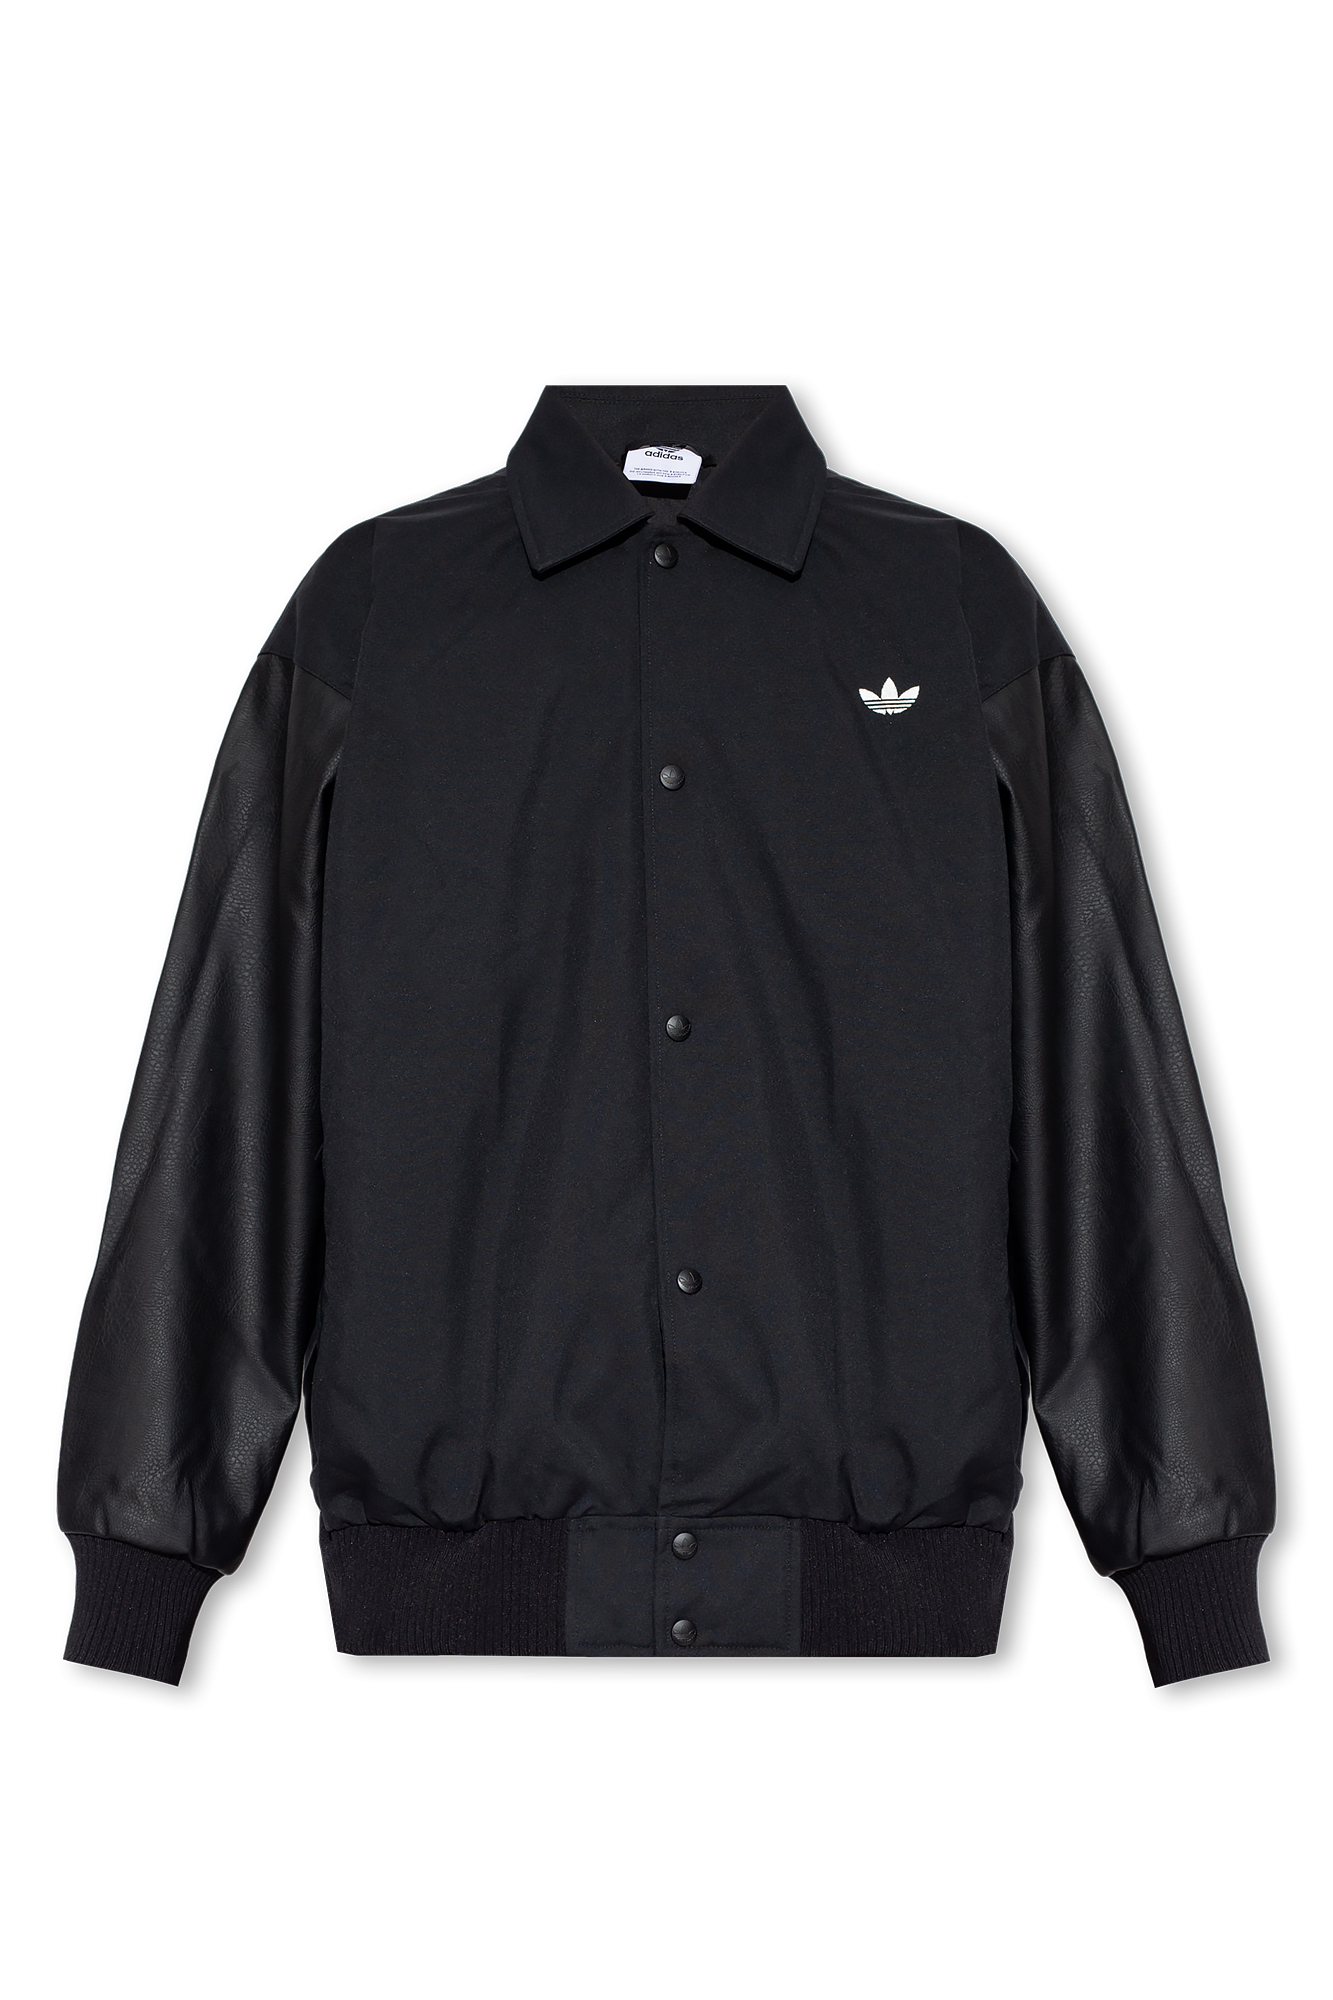 Black Track jacket with logo ADIDAS Originals - Vitkac Canada